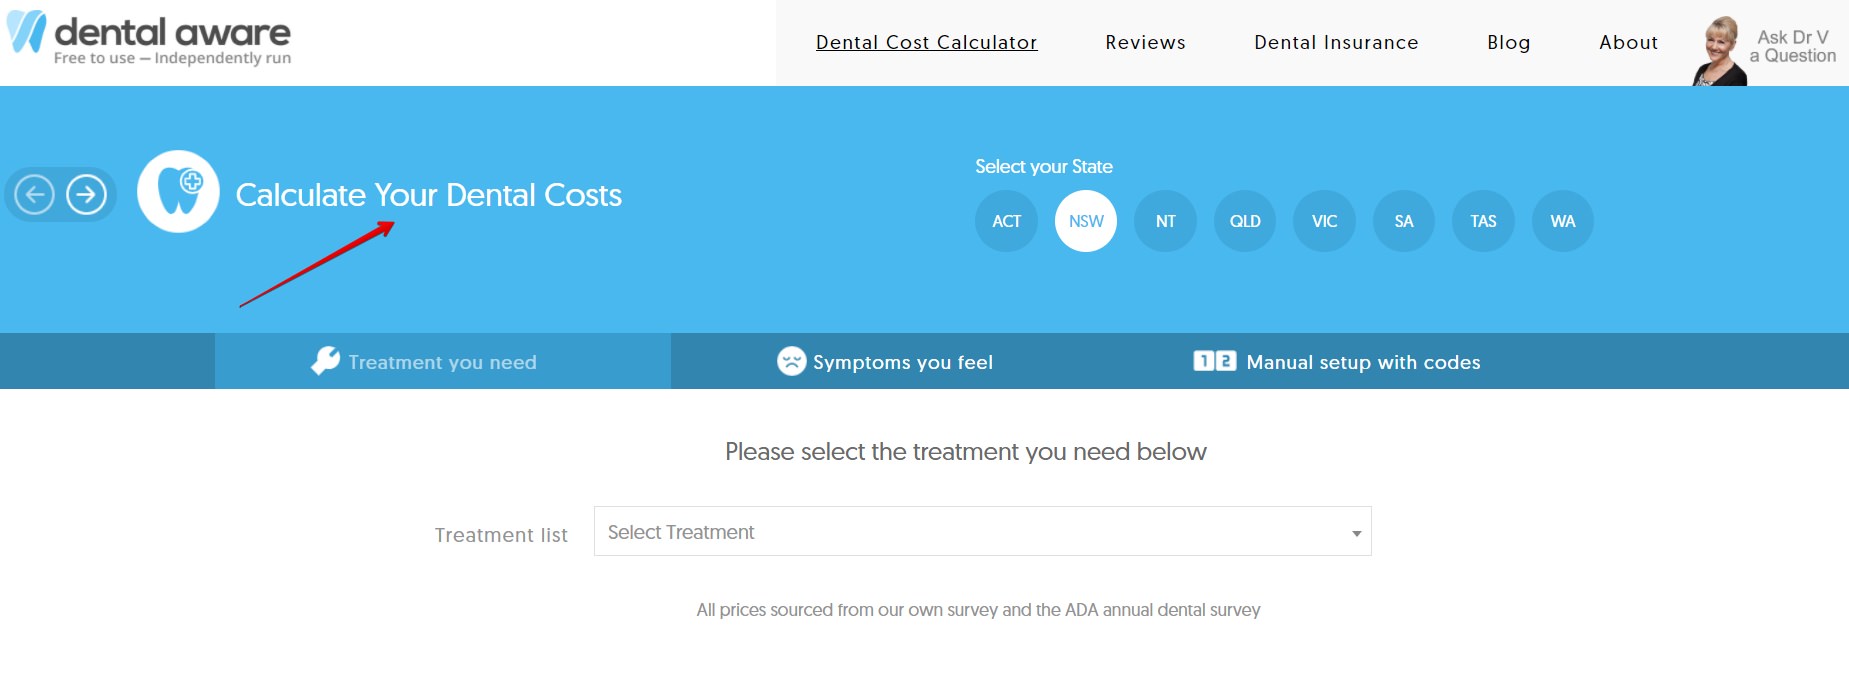 A screenshot of the dental aware dental cost calculator